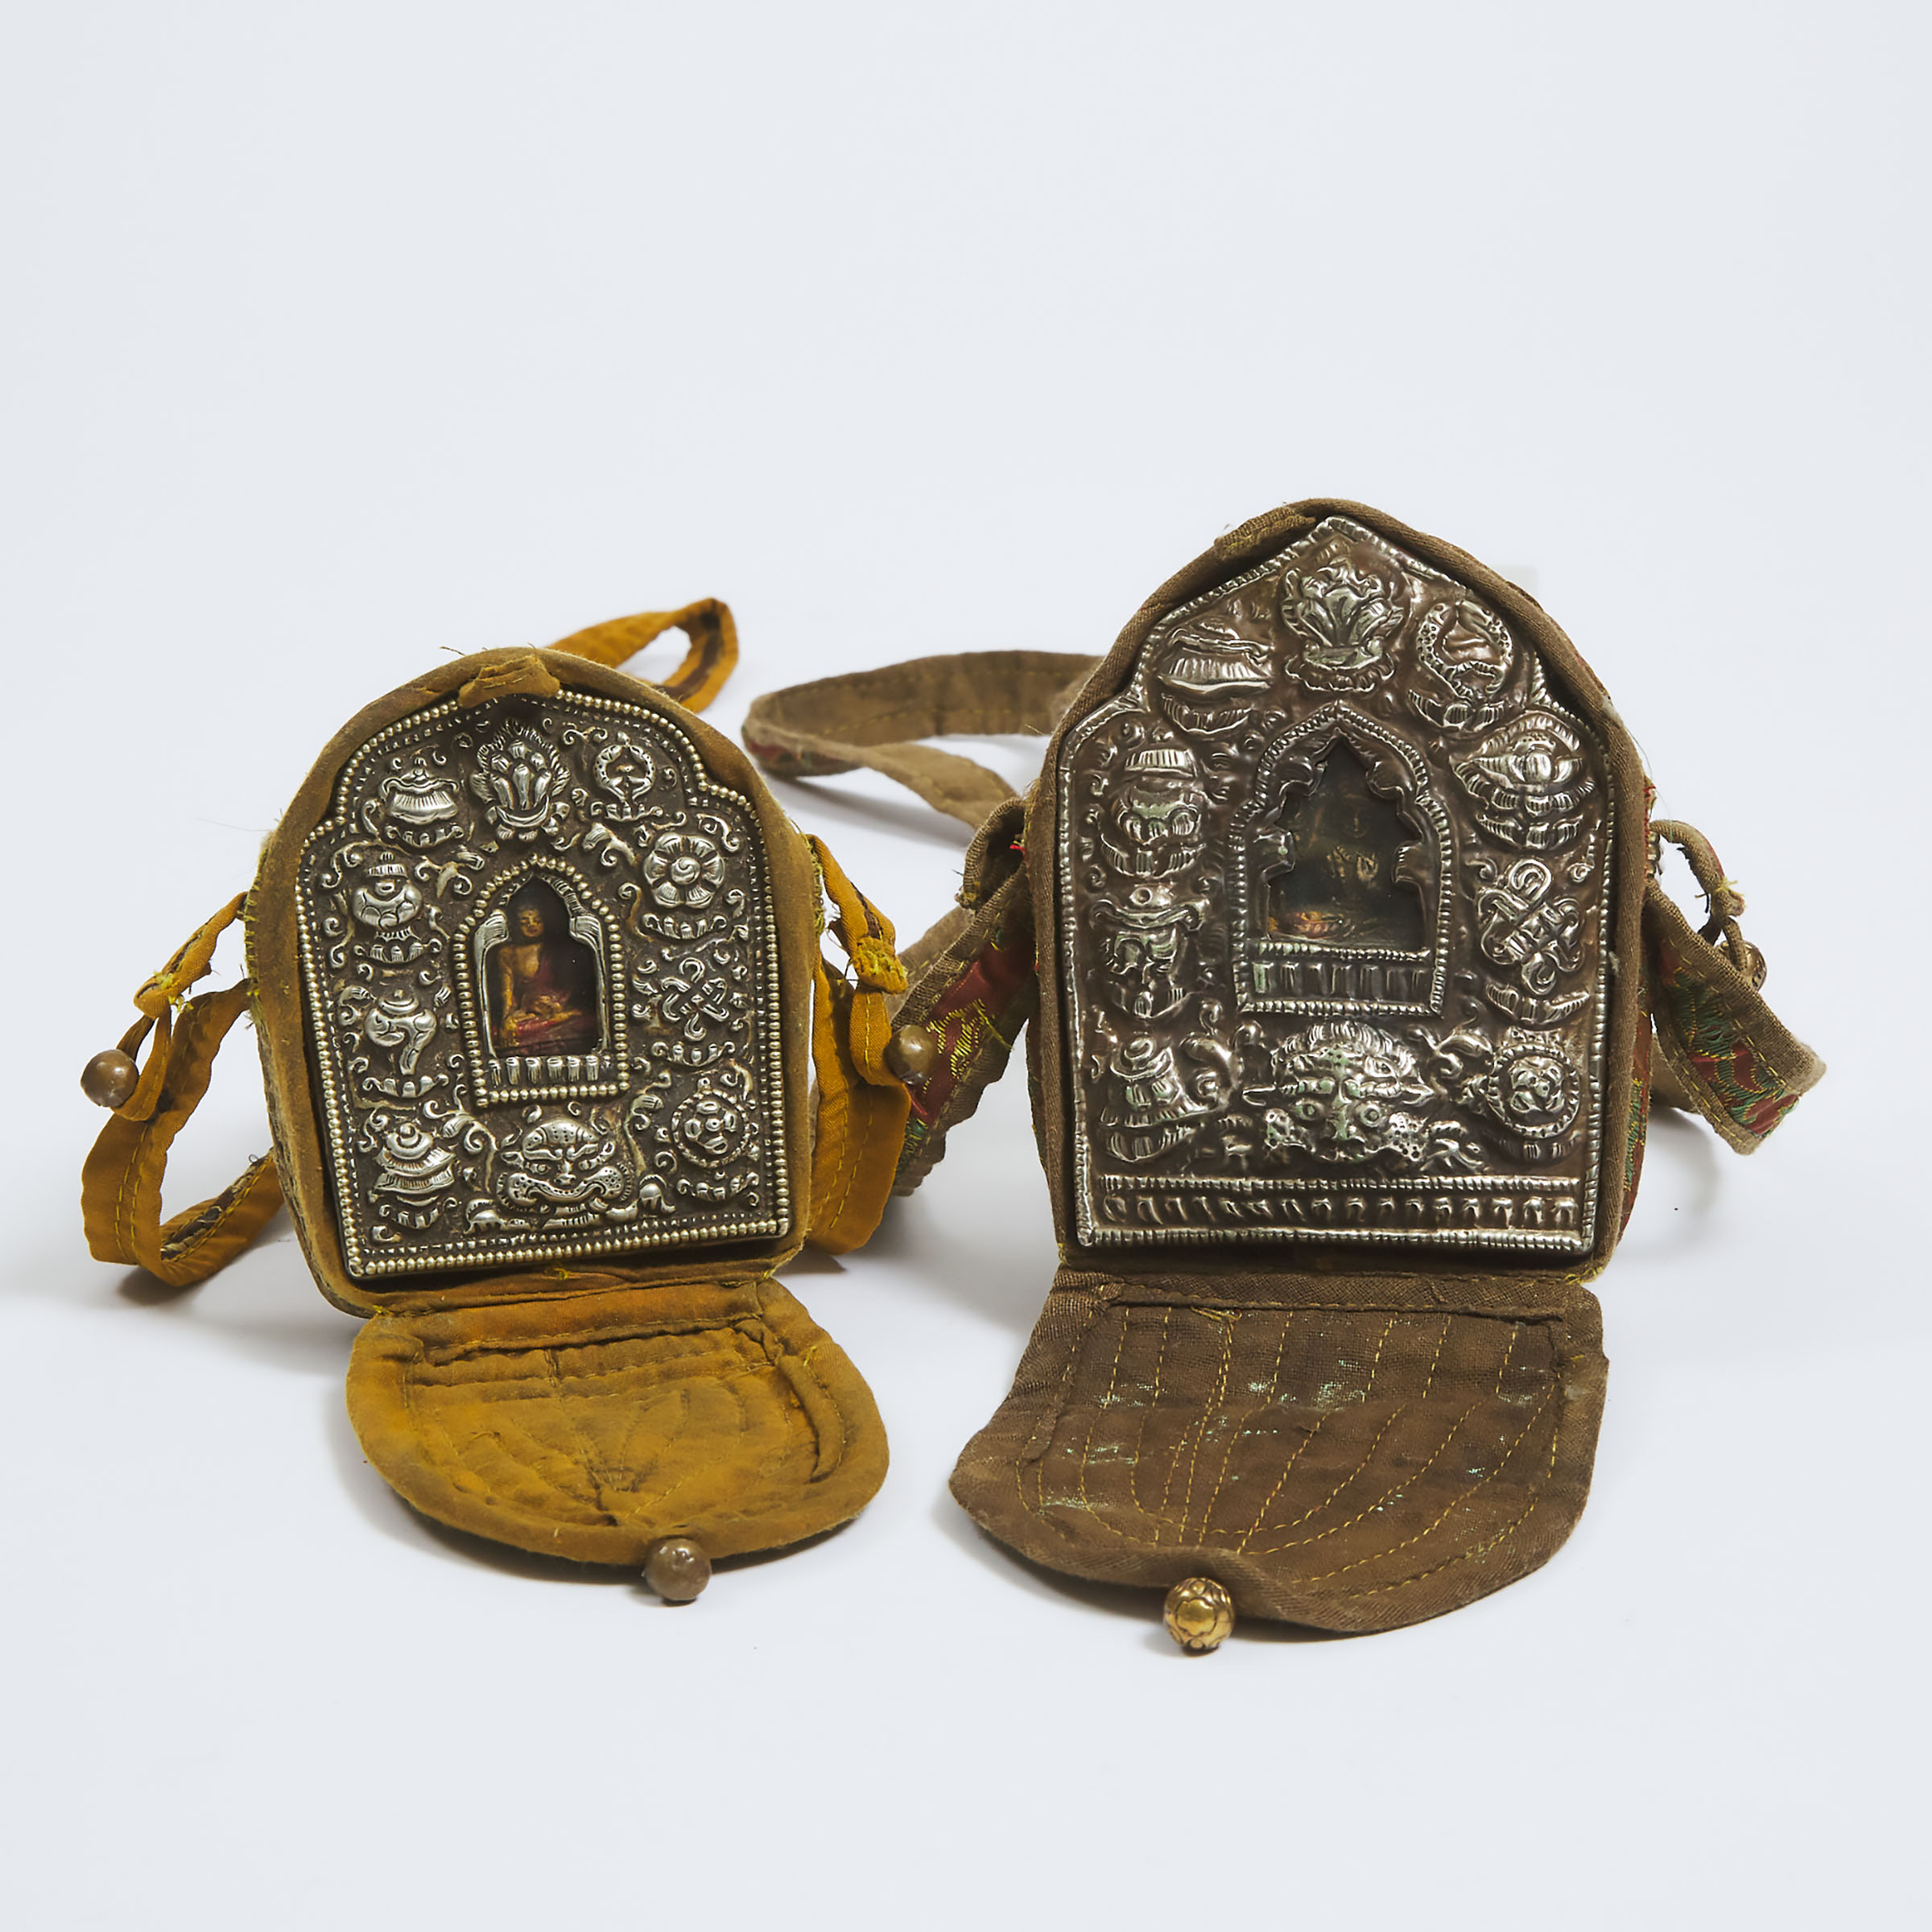 Two Tibetan Portable Amulet Boxes